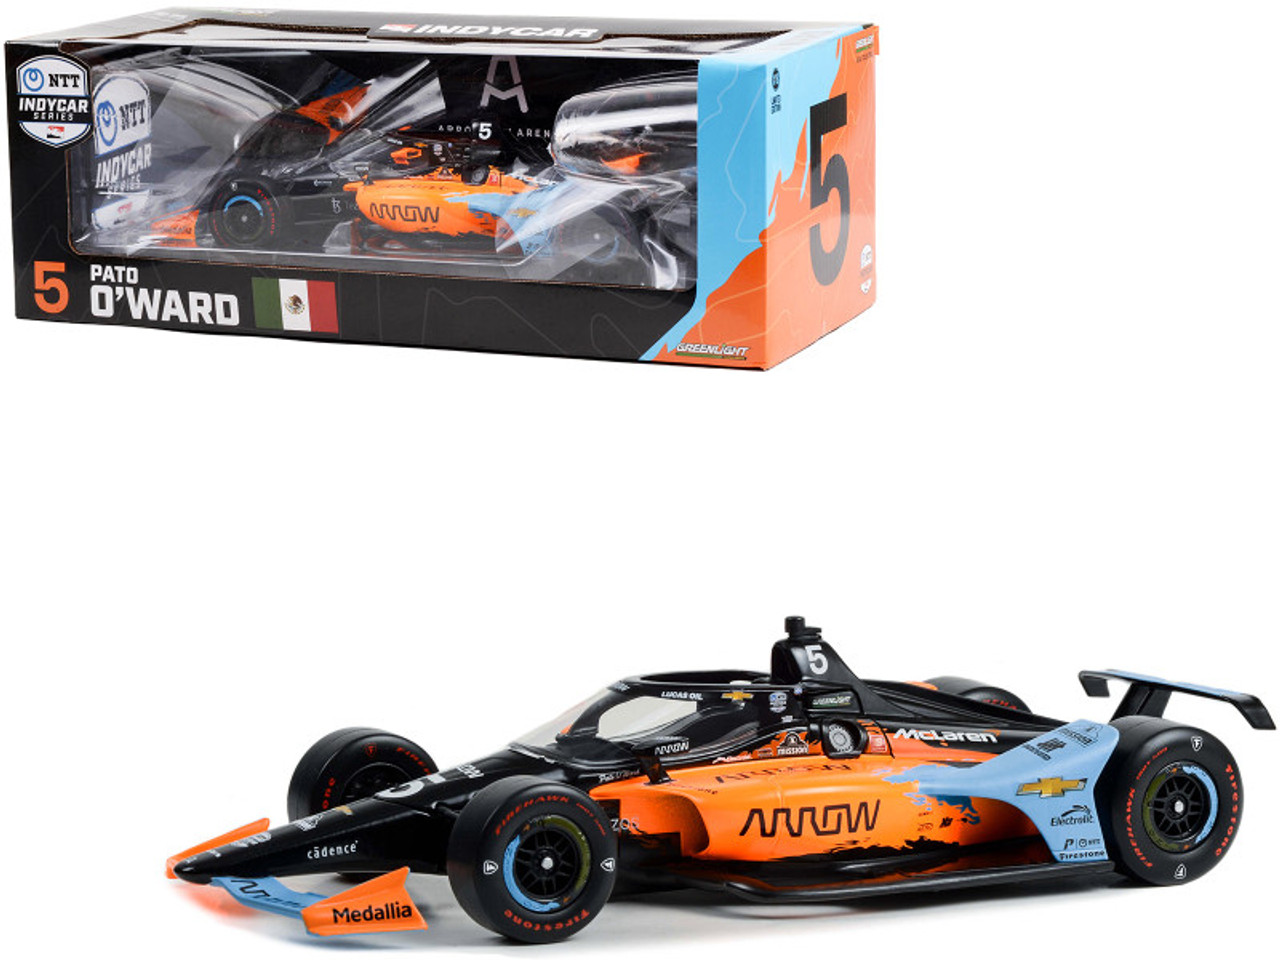 Dallara IndyCar #5 Pato O'Ward "UNDEFEATED" Arrow McLaren SP Indianapolis 500 "NTT IndyCar Series" (2022) 1/18 Diecast Model Car by Greenlight